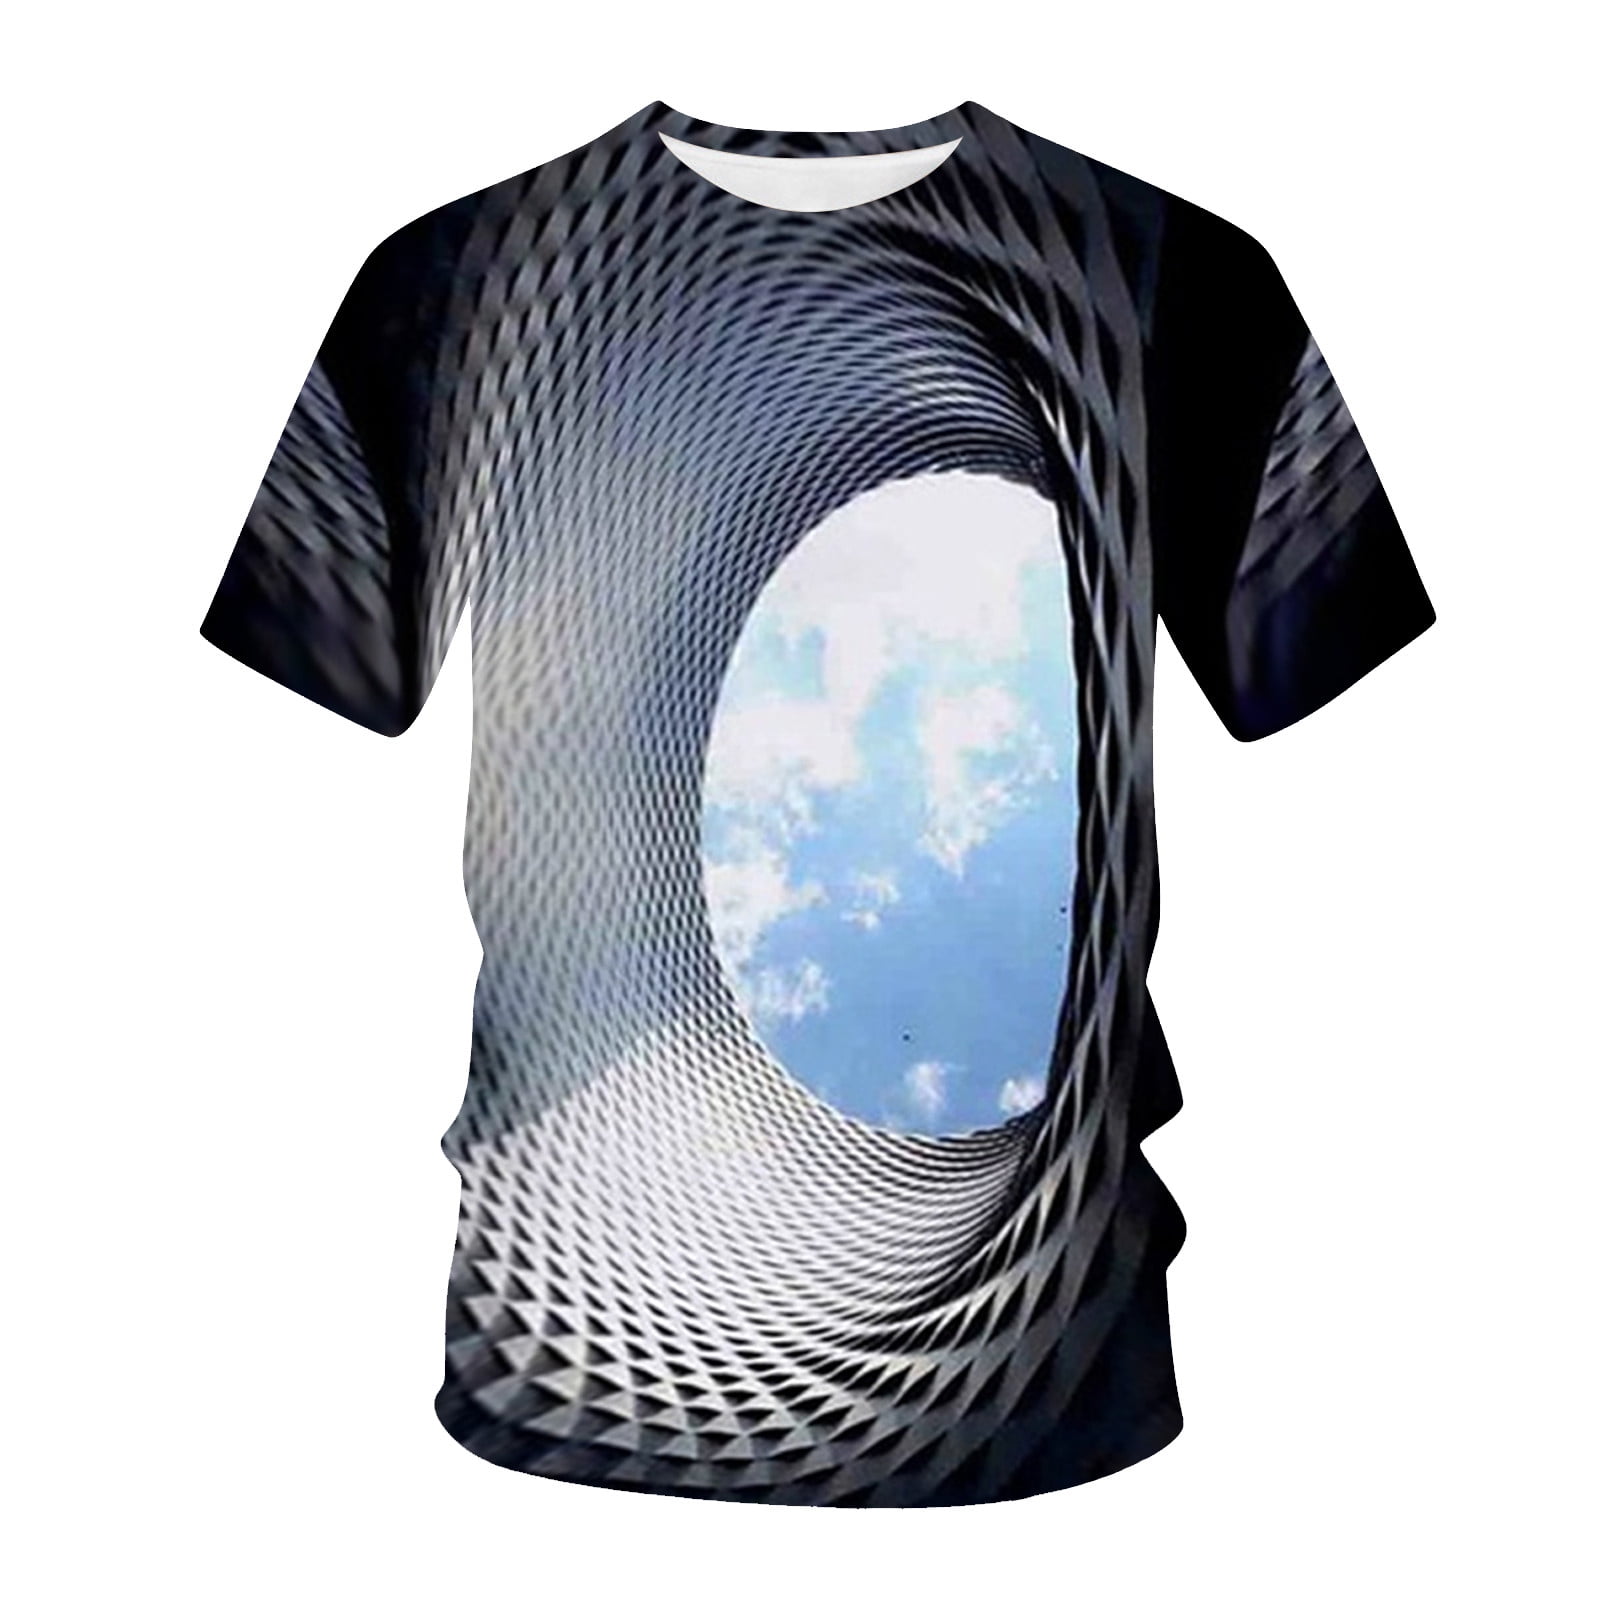 Hot Sale! New Fashion Women's/Men's Hypnotic Funny 3D Print Casual T-Shirt